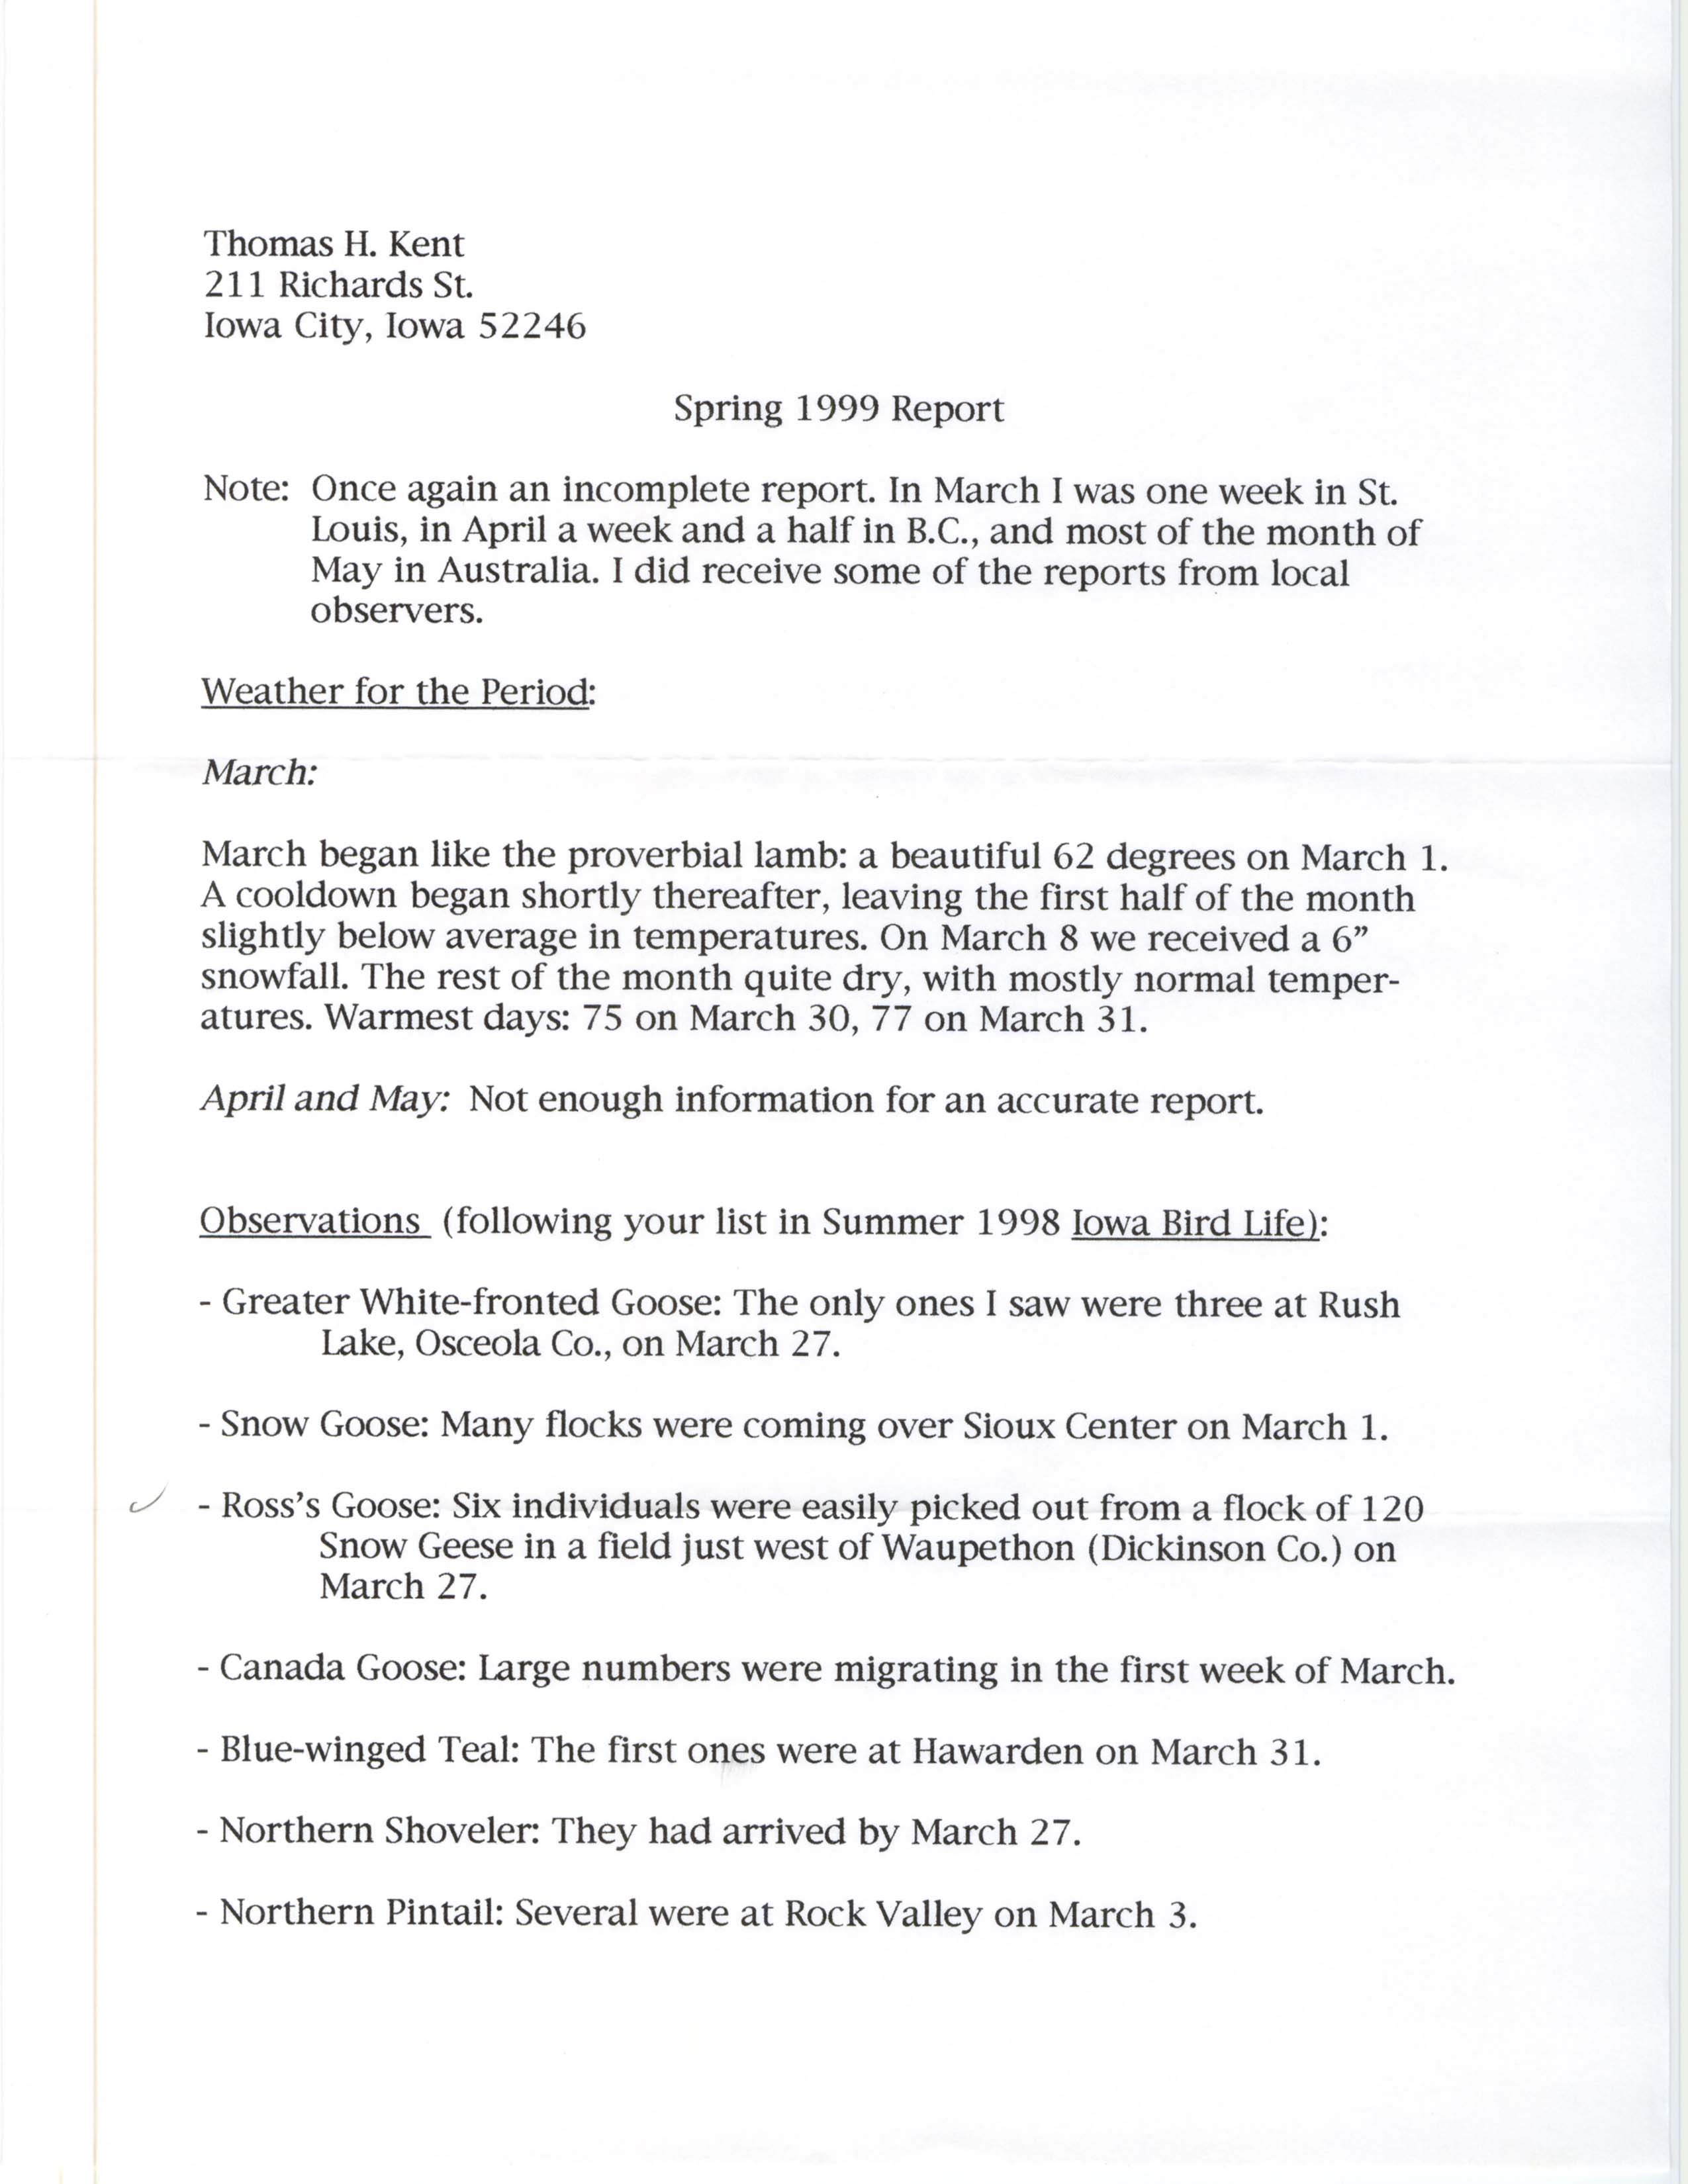 Spring 1999 report, John Van Dyk